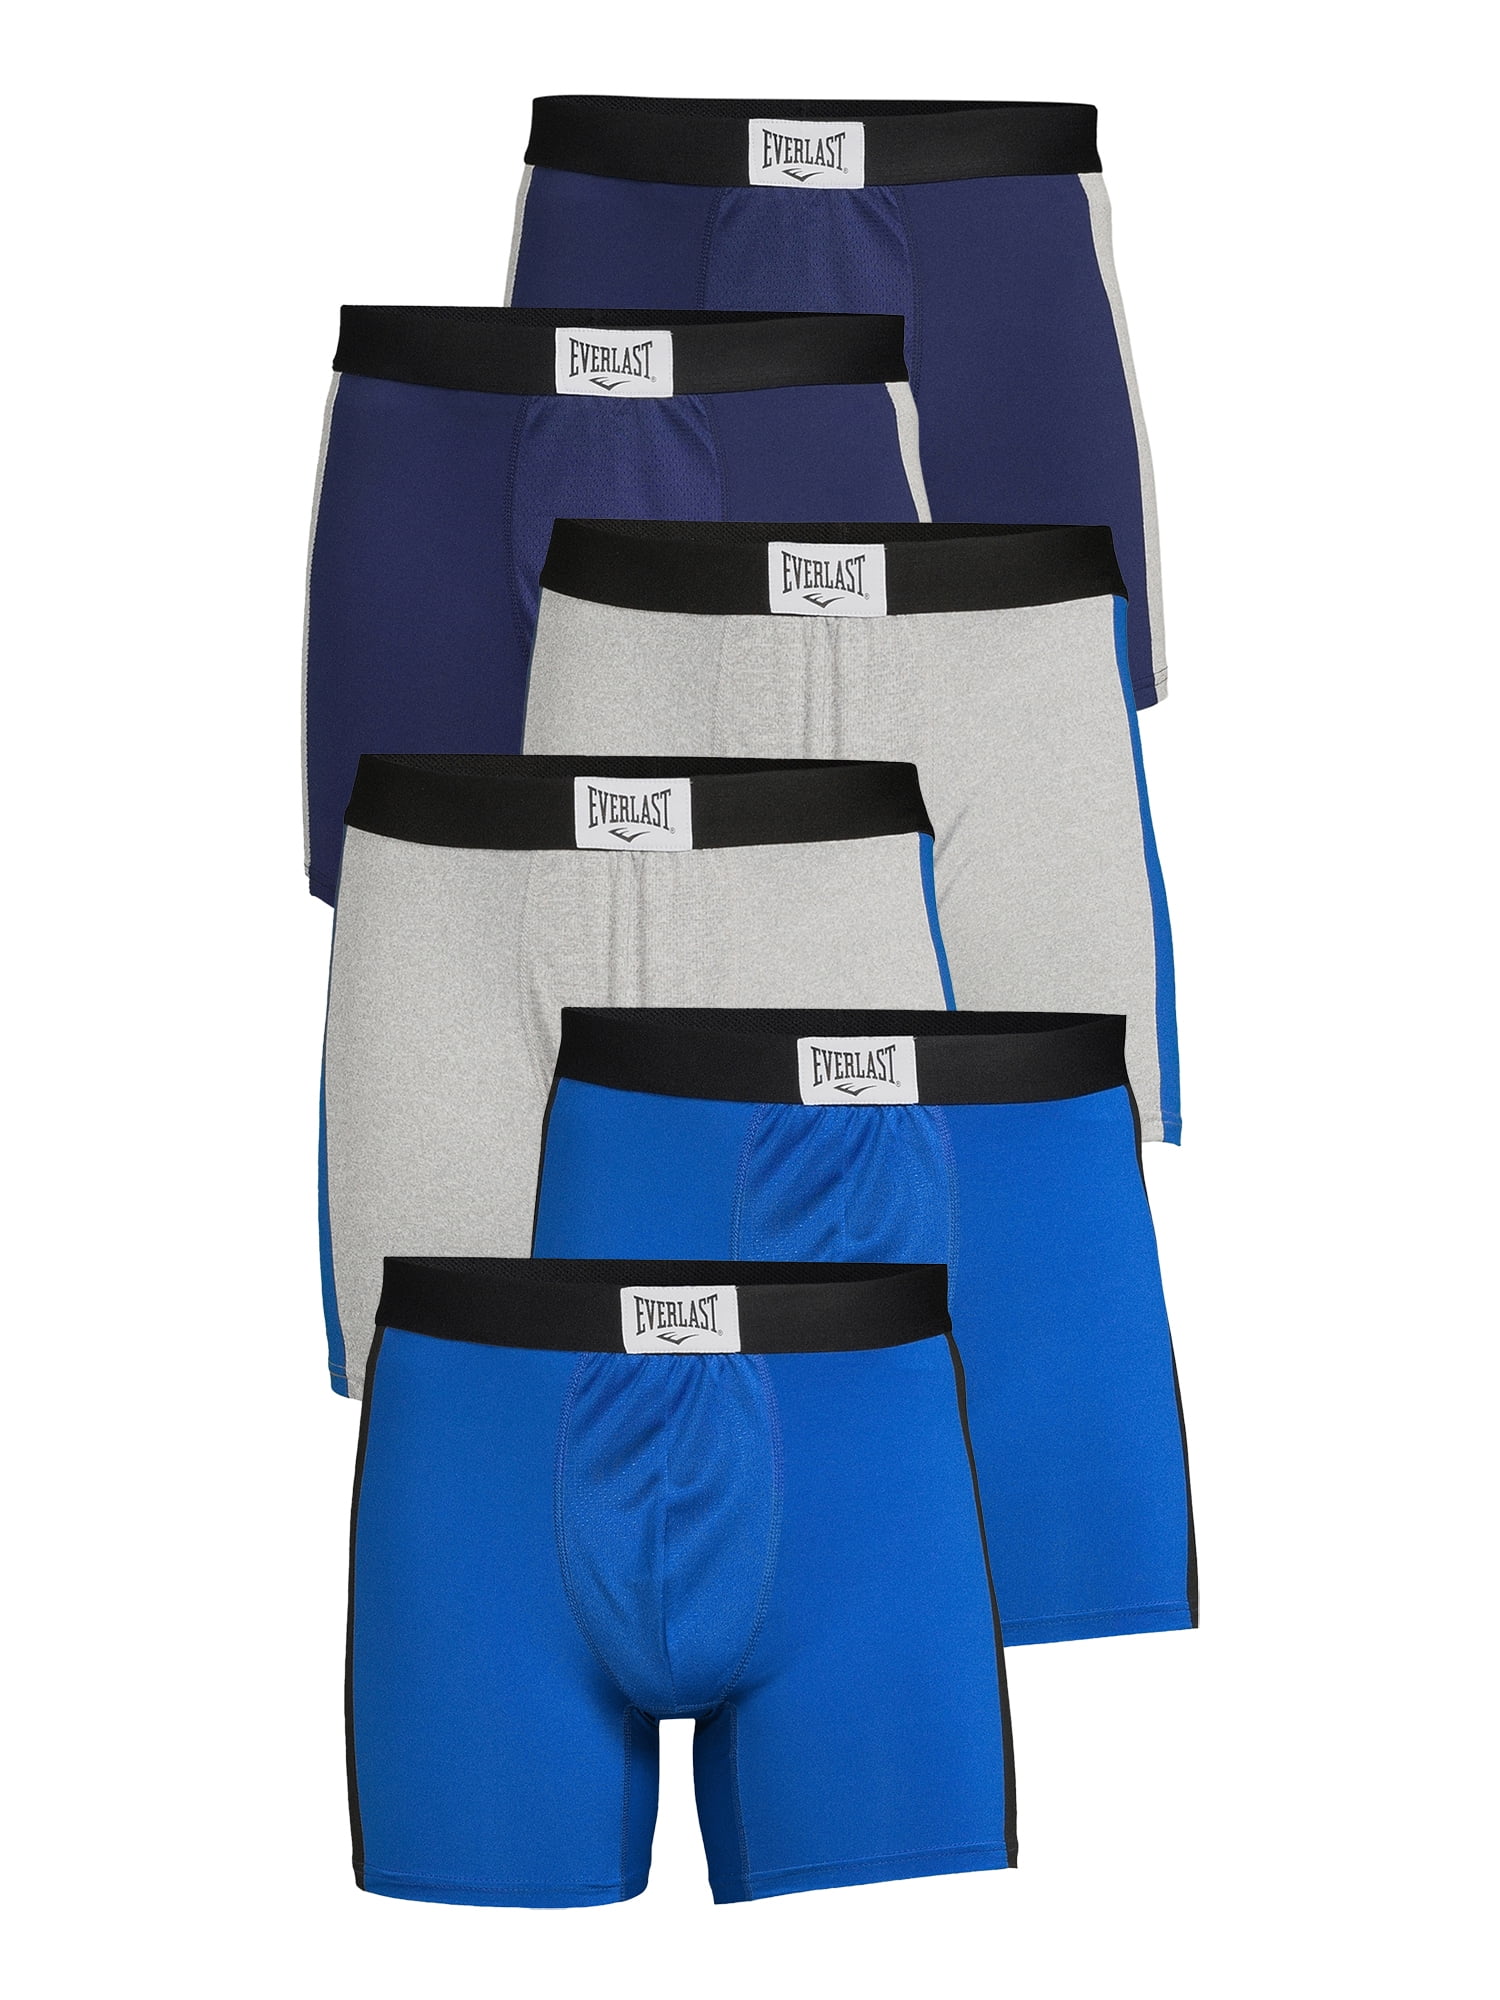 Everlast Men’s Boxer Briefs Performance Breathable Underwear for Men, 6 ...